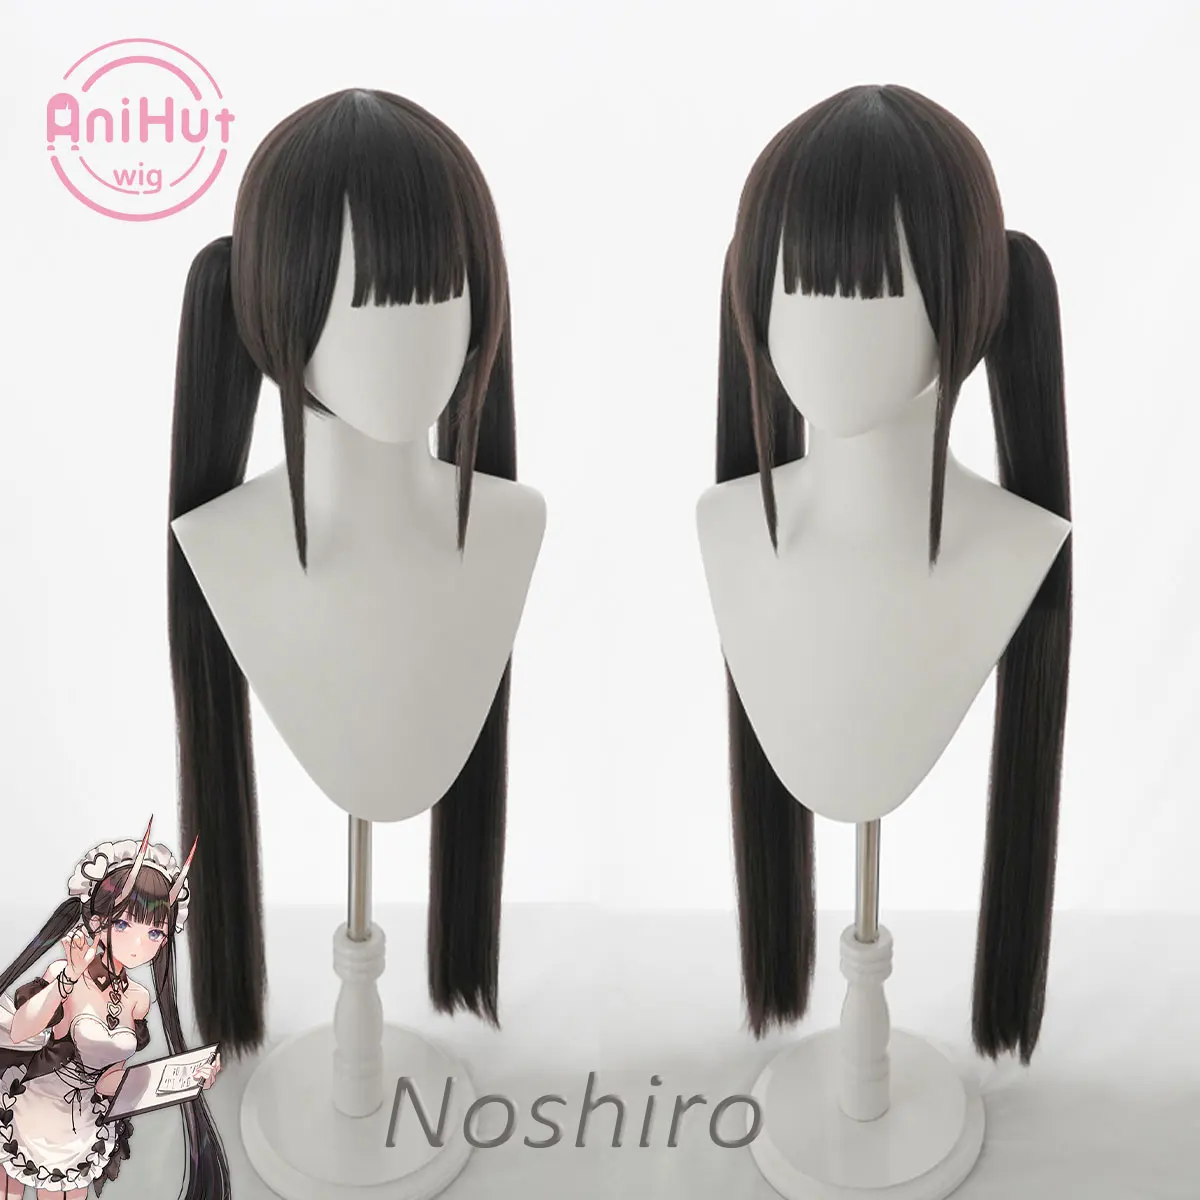 【Anihut】Noshiro Cosplay Parukas Kaks ponytails Mäng Azur Lane Naiste kuumuskindel Sünteetiline Must Pruun Cosplay Parukas Noshiro Cosplay